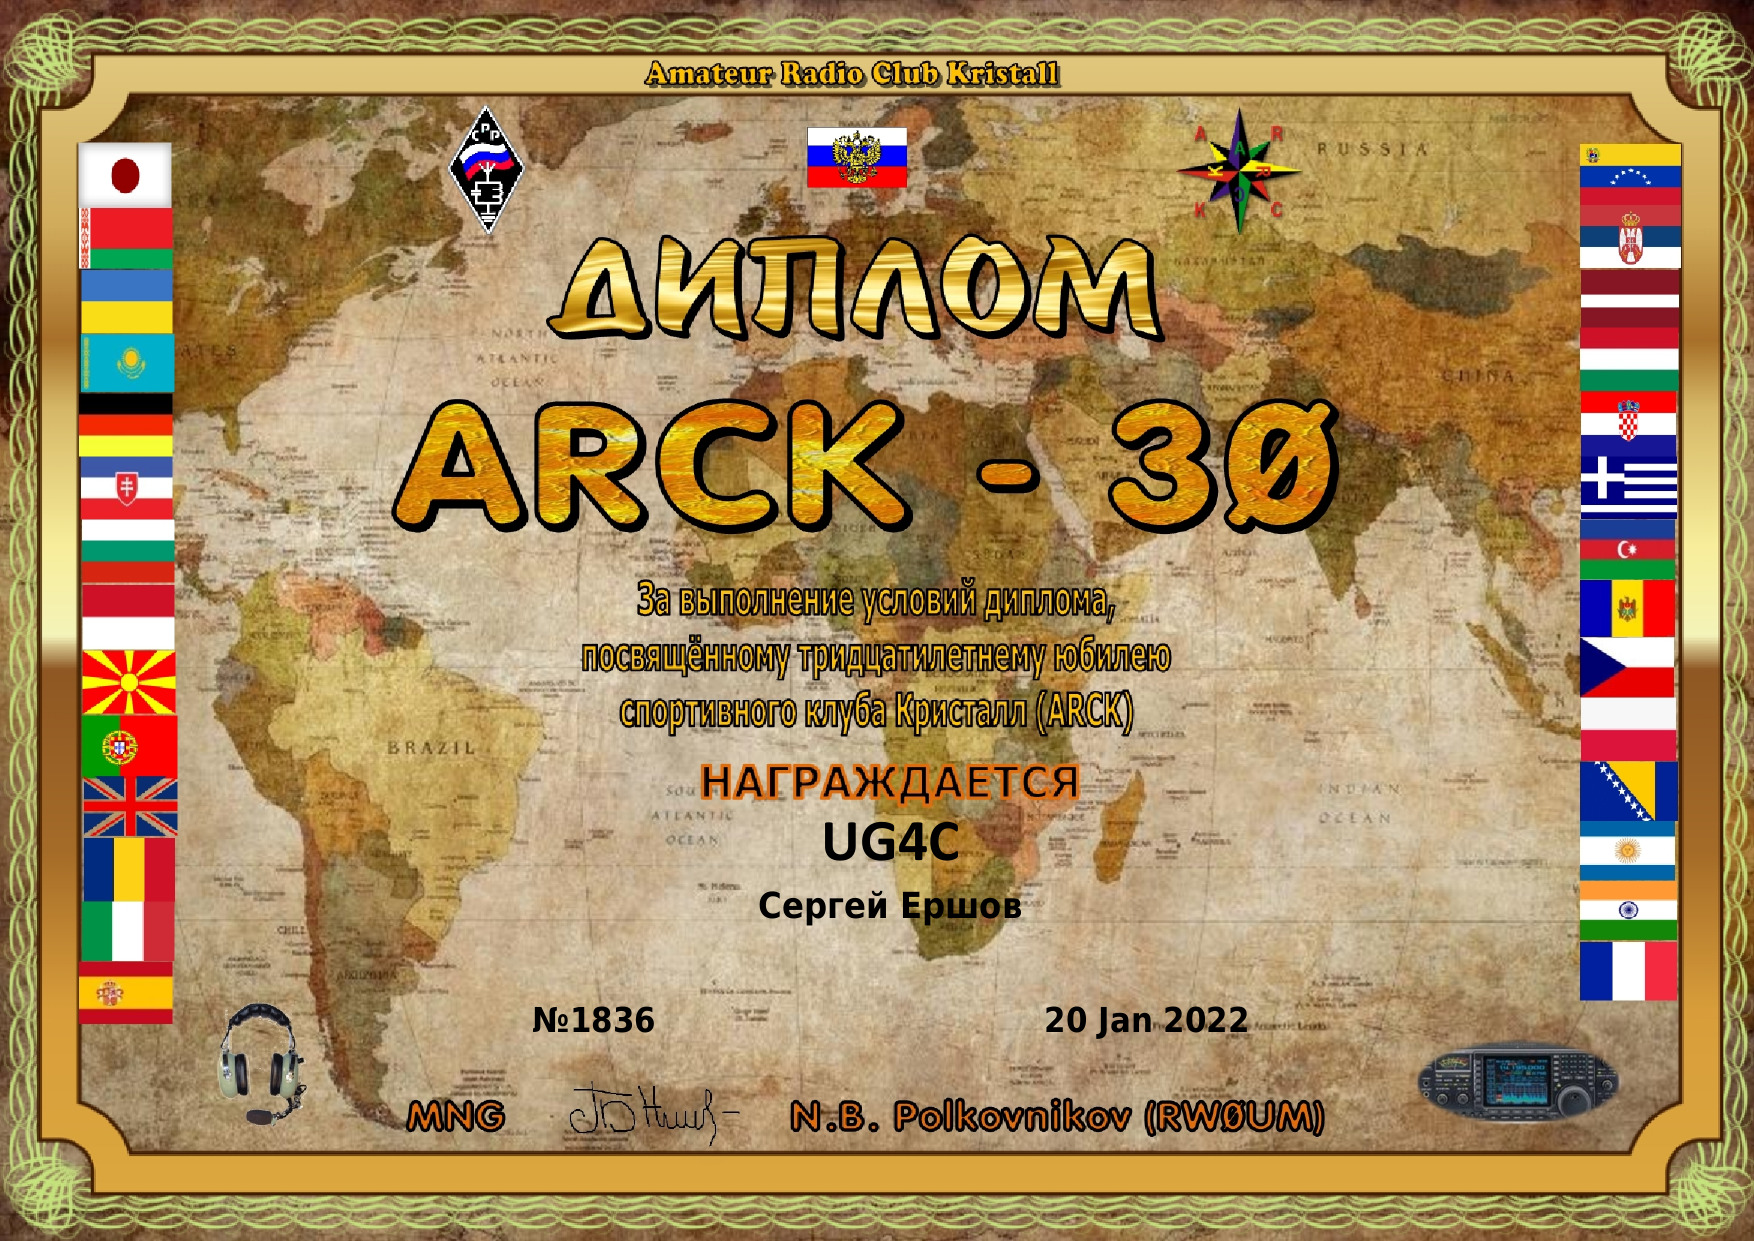 ARCK 30